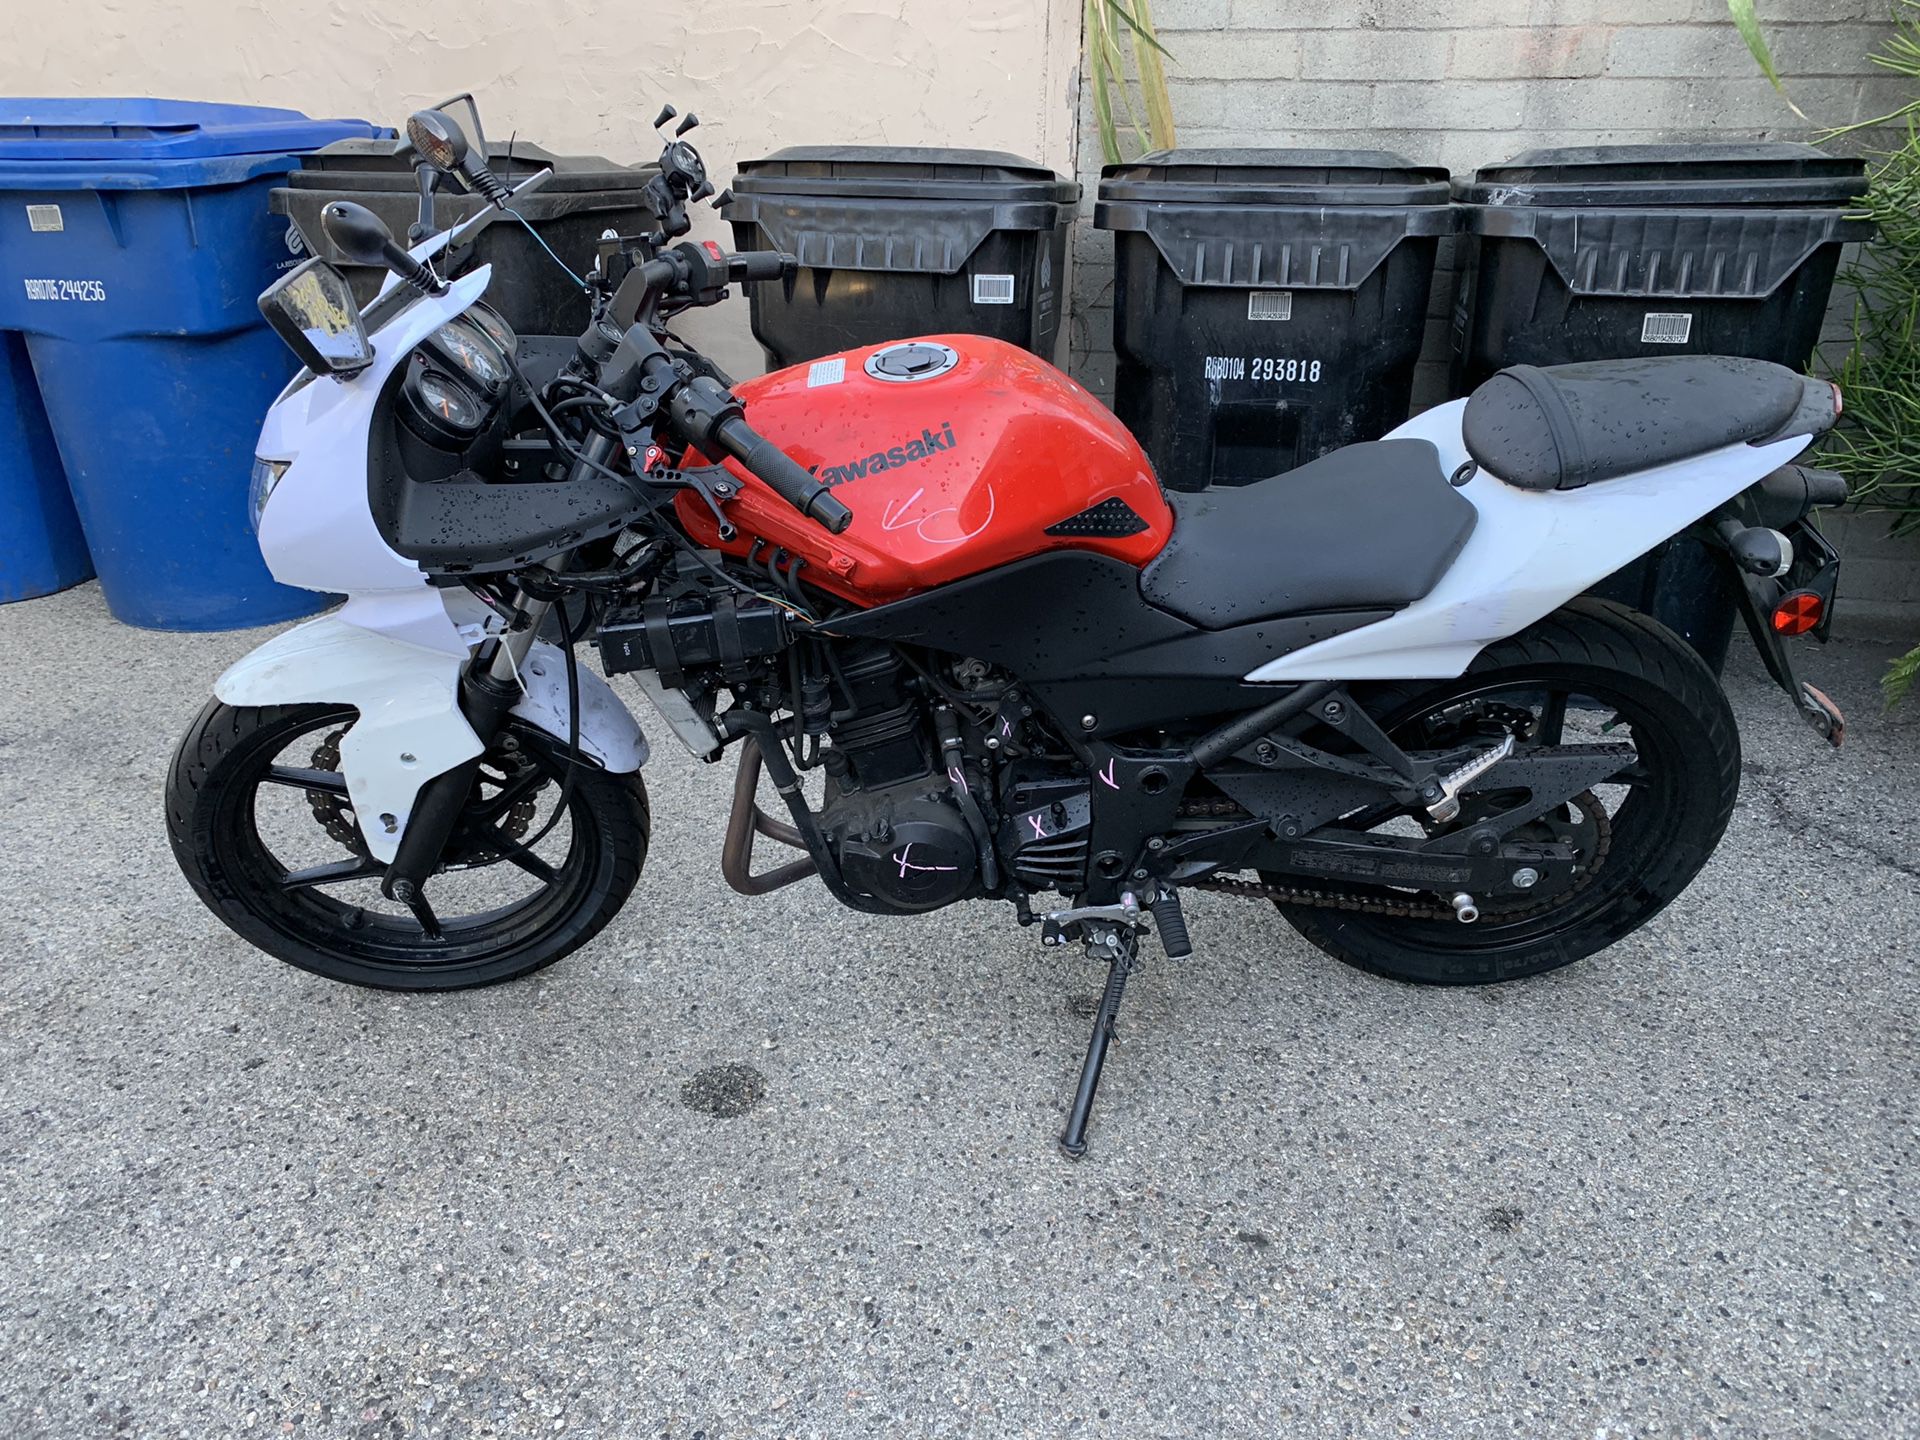 ‘09 Kawasaki Ninja 250r MOTORCYCLE - READ FULL DESCRIPTION